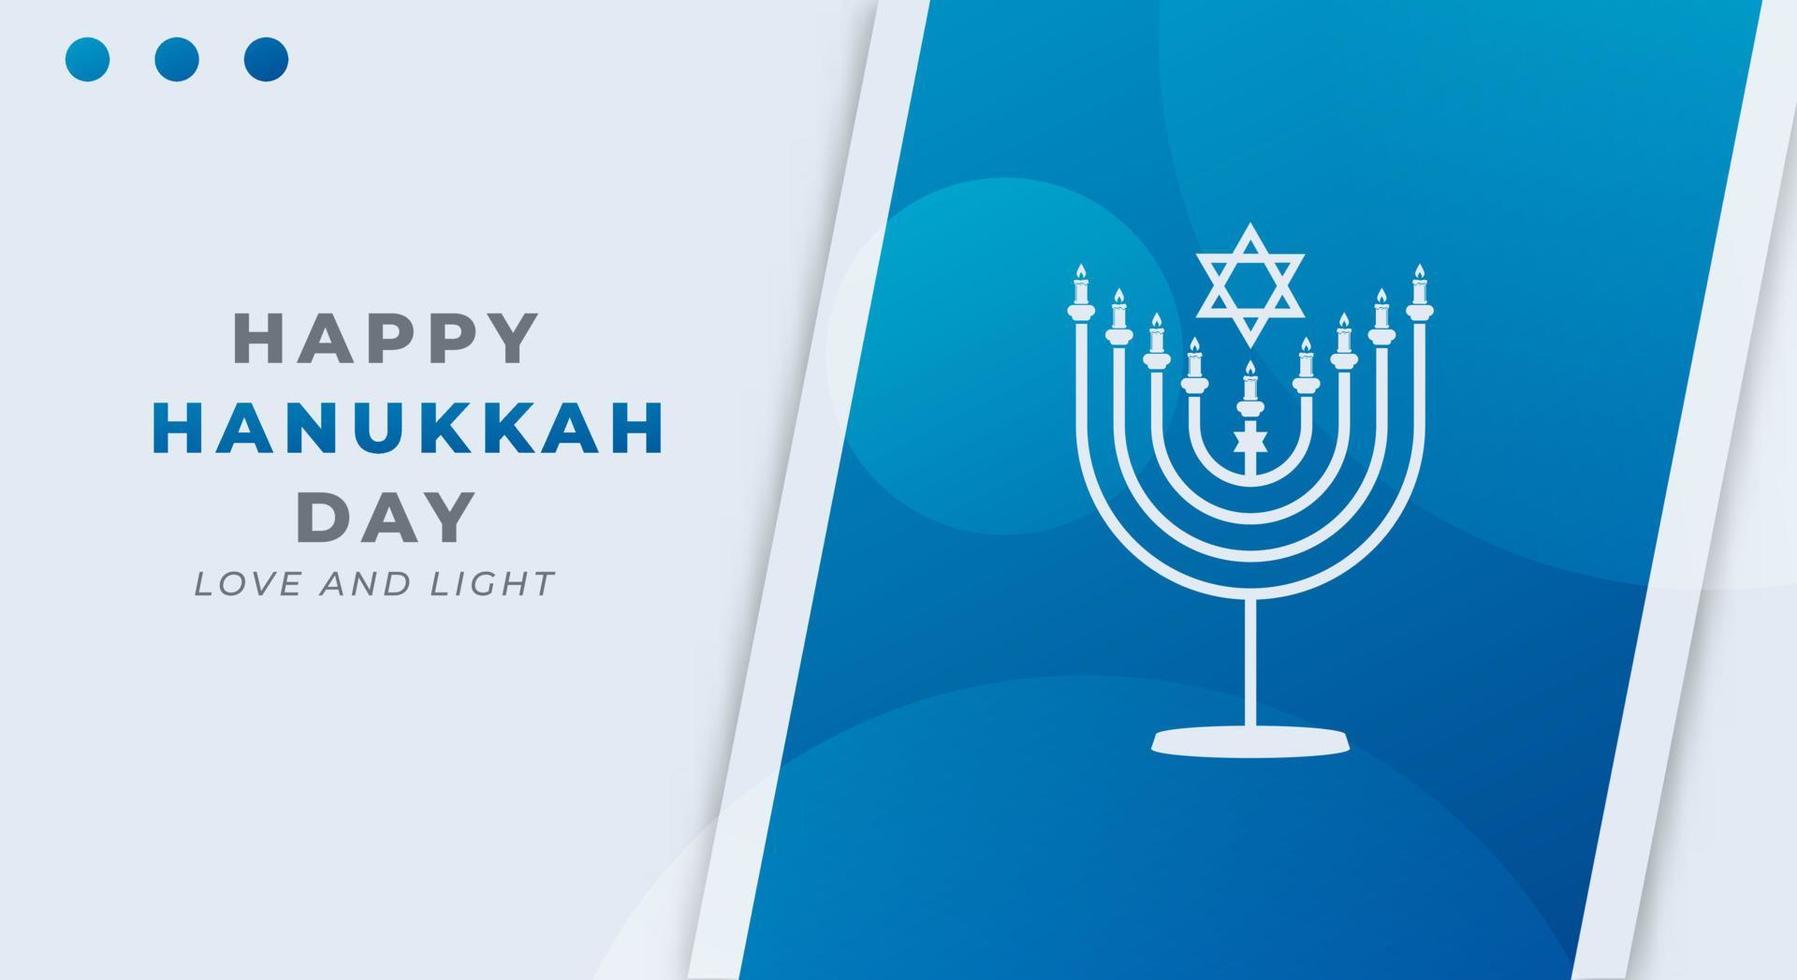 Happy Hanukkah Love and Light Celebration Vector Design Illustration. Template for Background, Poster, Banner, Advertising, Greeting Card or Print Design Element